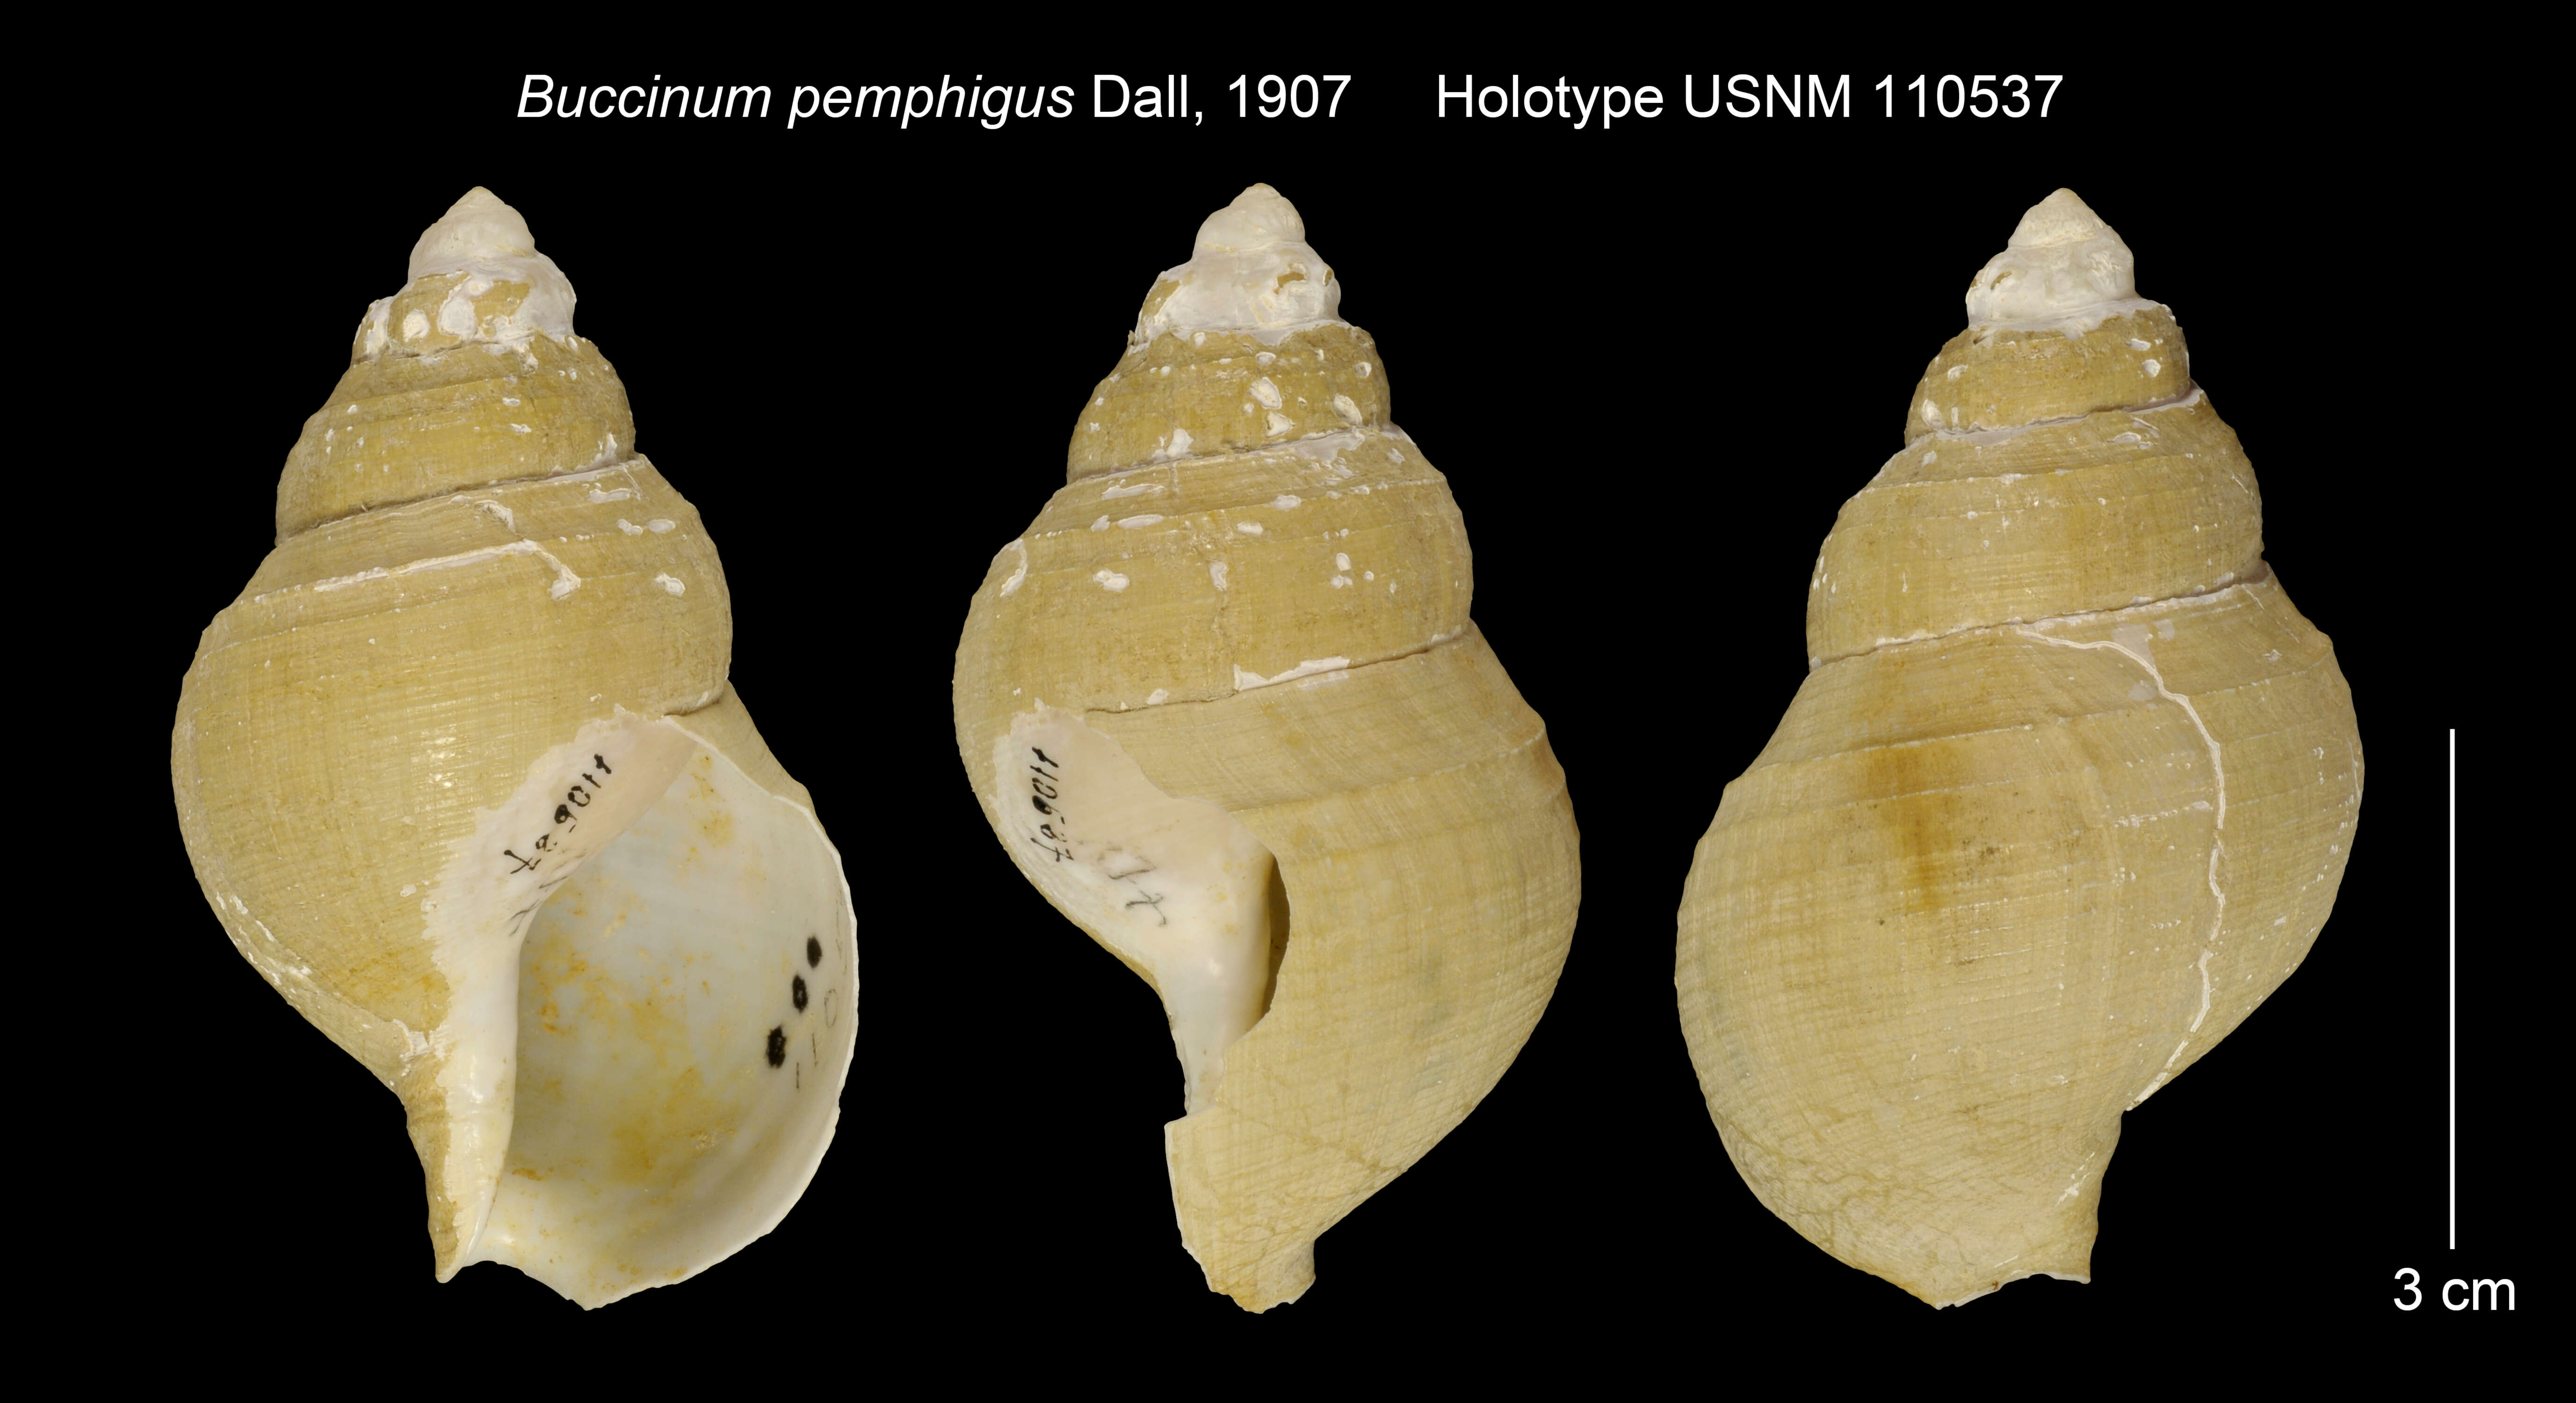 Image of Buccinum pemphigus Dall 1907